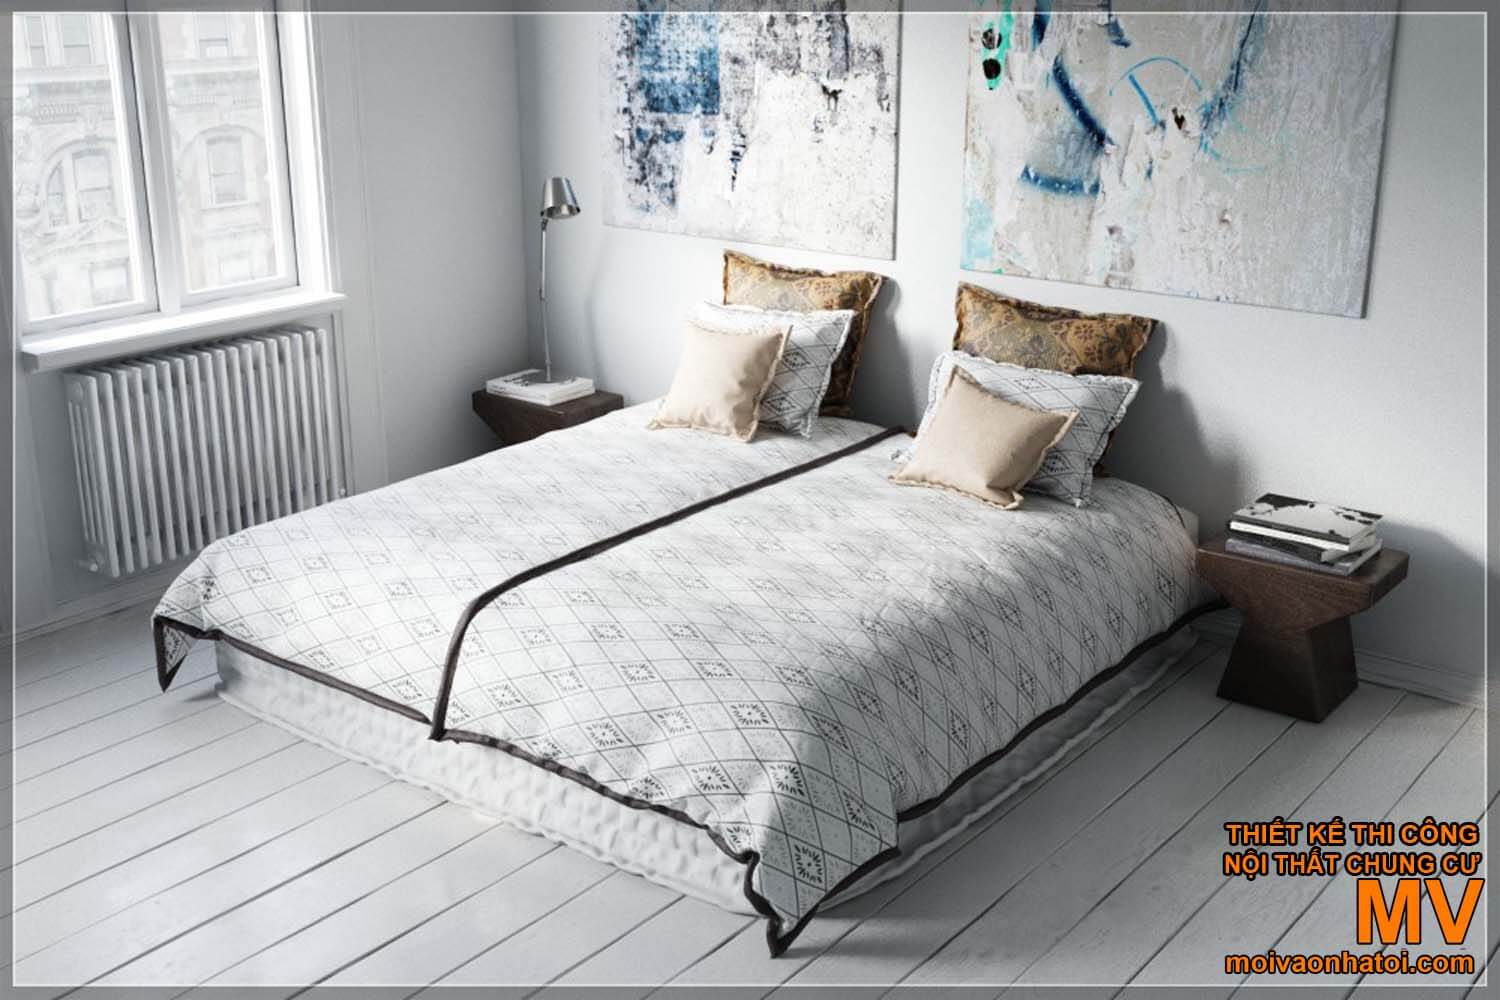 Desain kamar tidur - Dekorasi tempat tidur Skandinavia